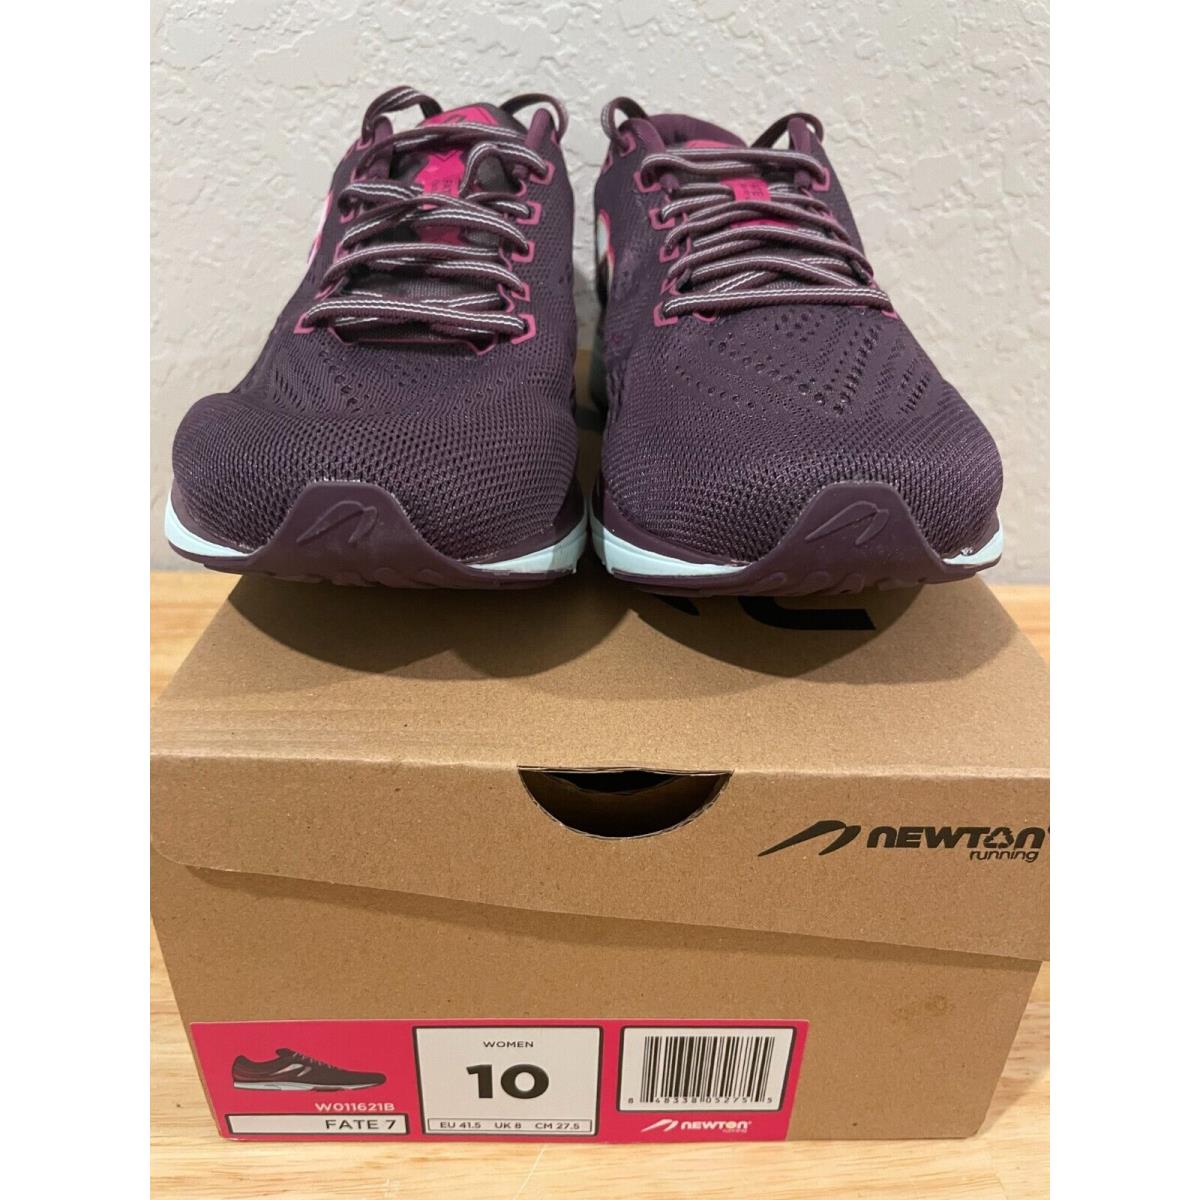 Newton Ton Fate 7 Women`s Running Shoes Purple US 10